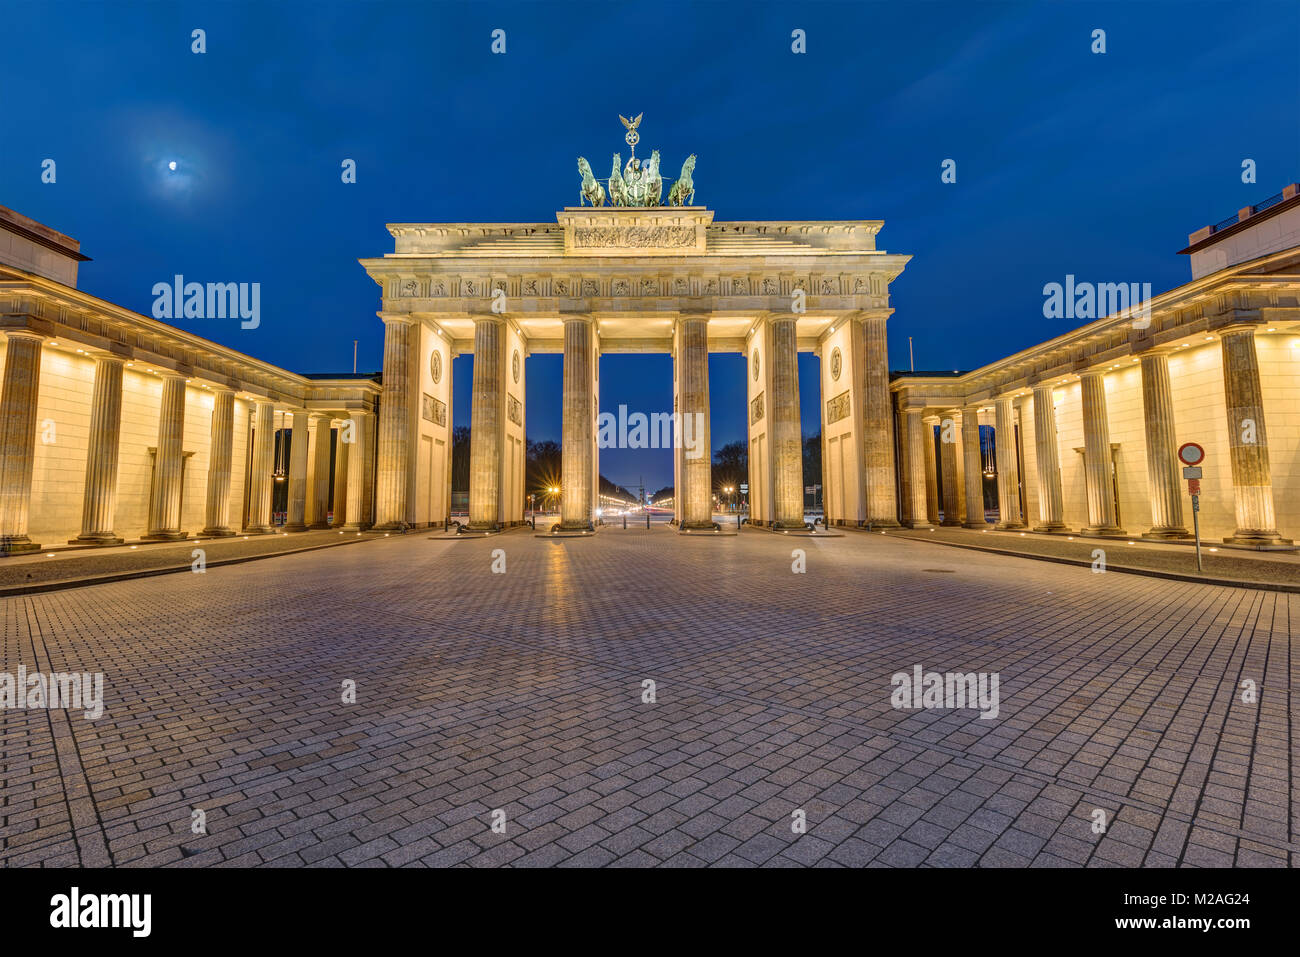 The famous Brandenburg Gate in Berlin illuminated at dawn Stock Photo